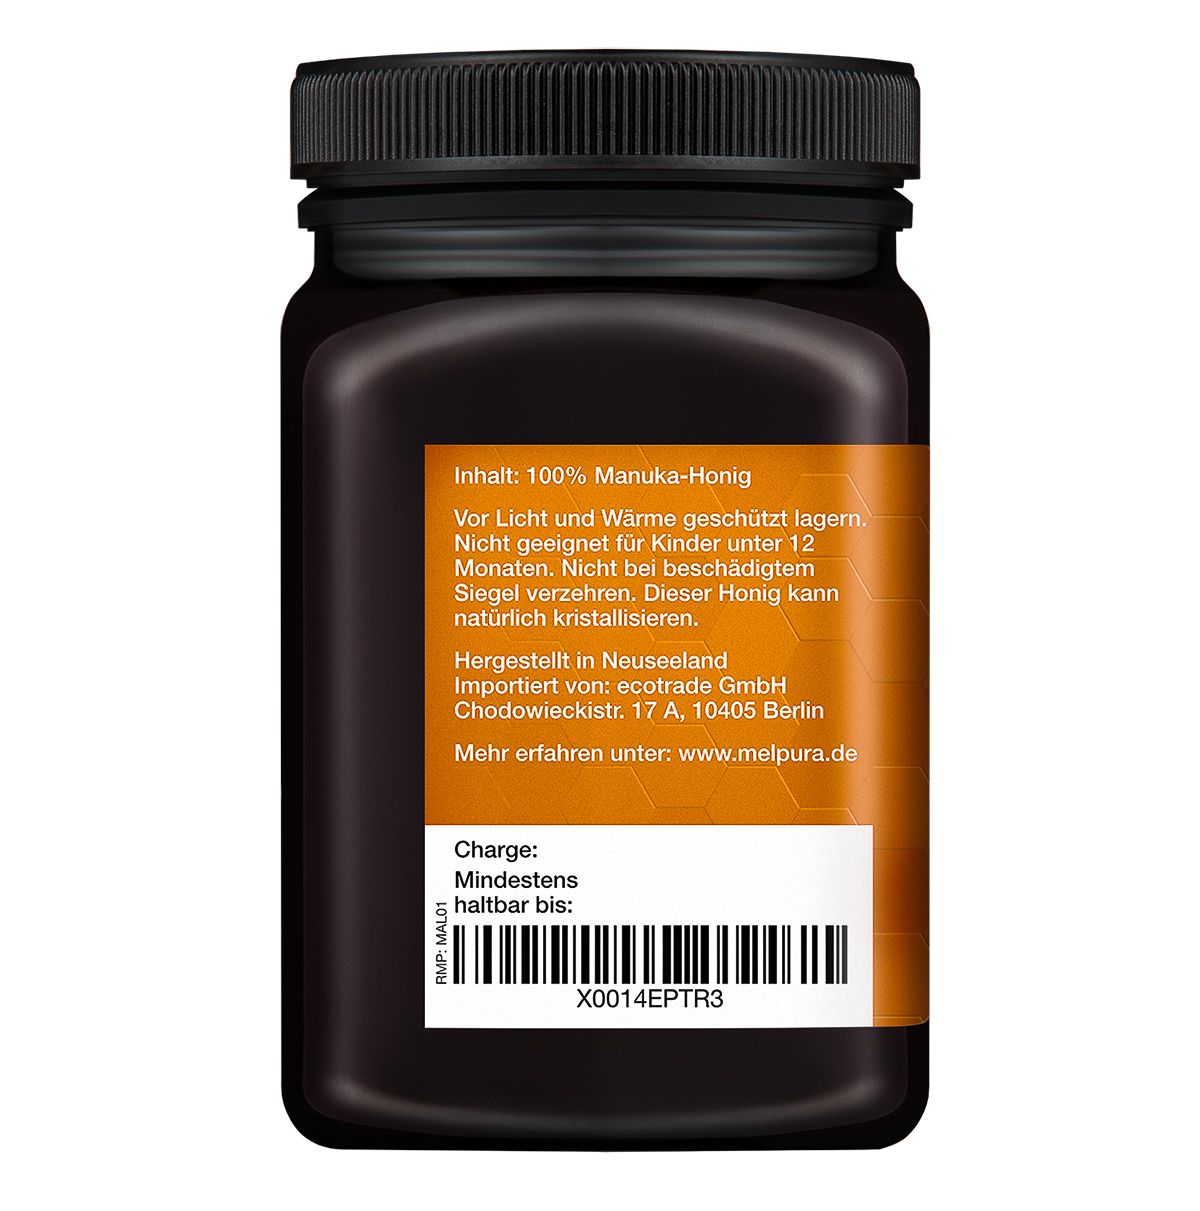 MELPURA Manuka Honig MGO 400+ aus Neuseeland mit zertifiziertem, natürlichem Methylglyoxal-Gehalt